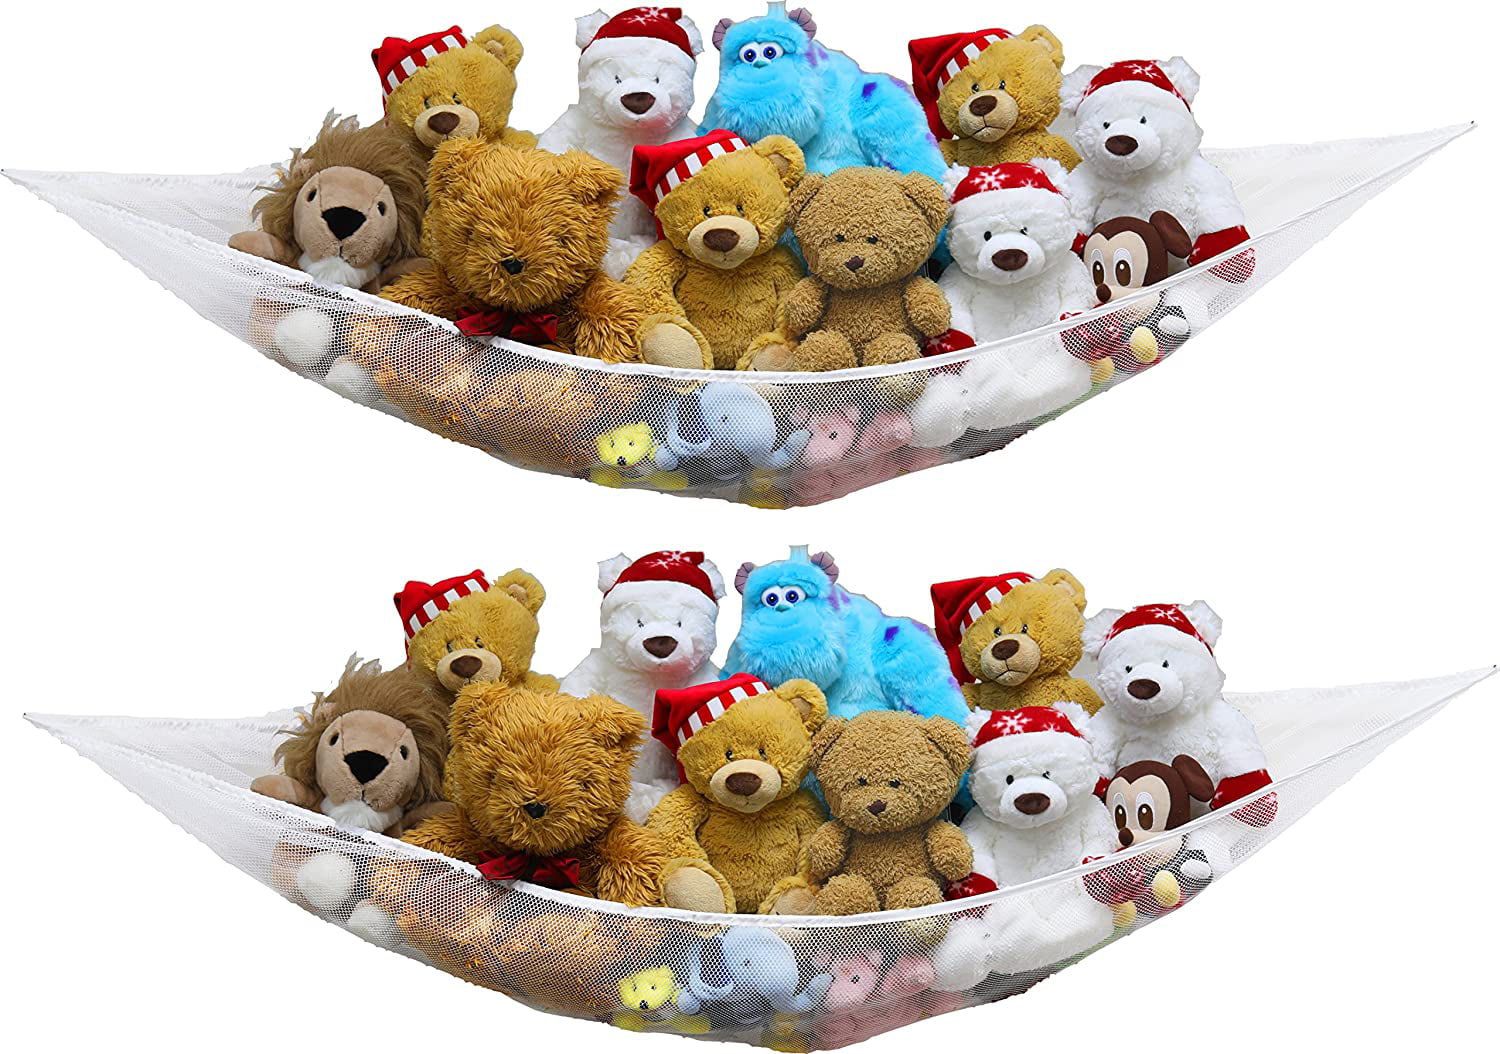 UK Large Soft Toy Hammock Mesh Net Teddy Bear Keep Baby Childs Bedroom Tidy 2019 